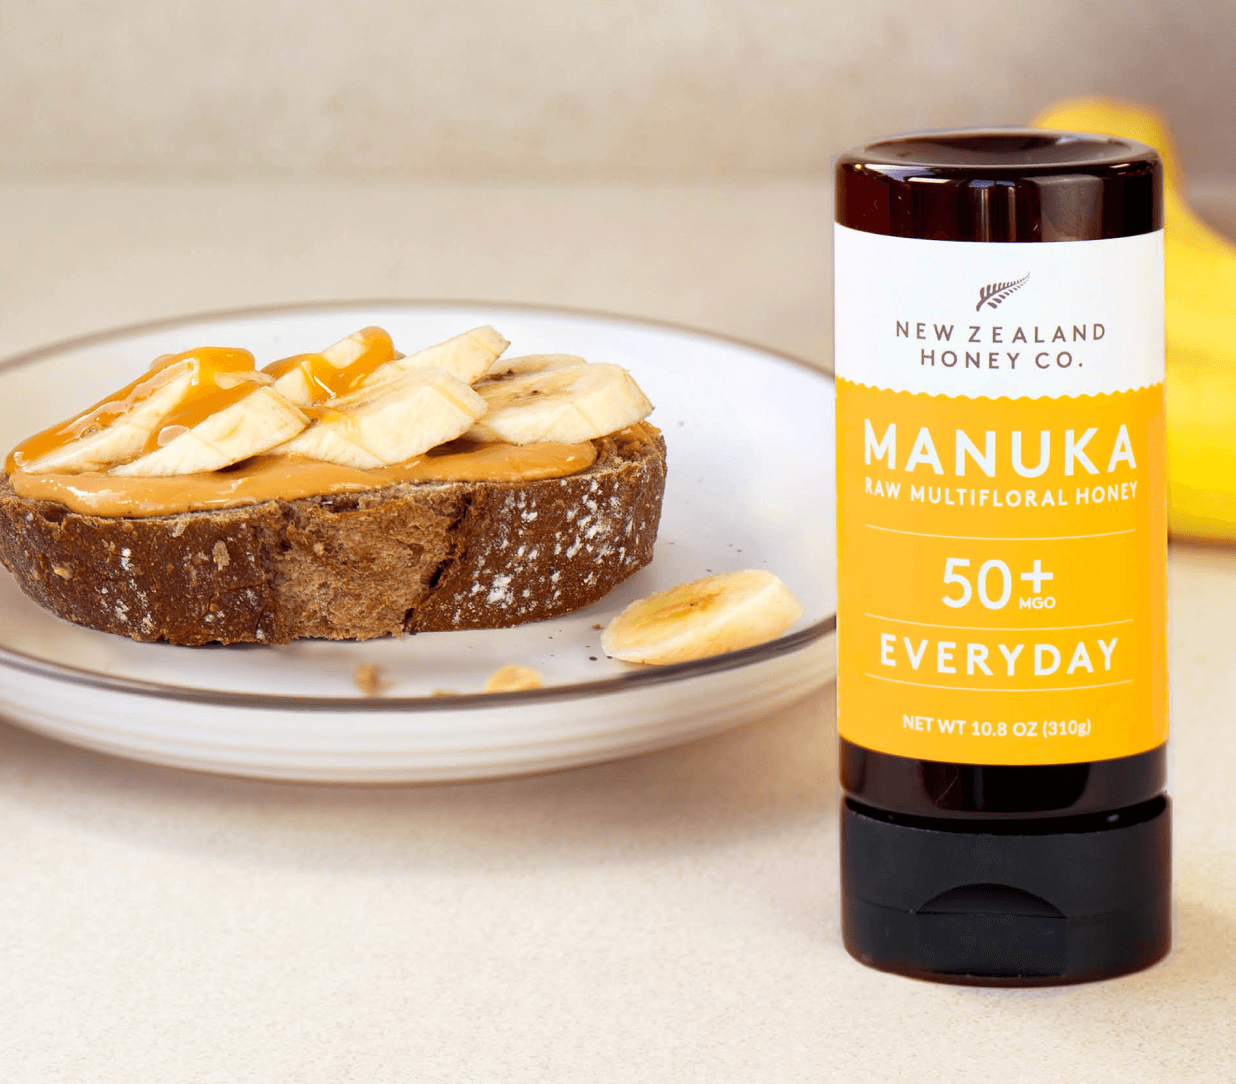 Manuka Honey MGO 50+ 310g Squeezy